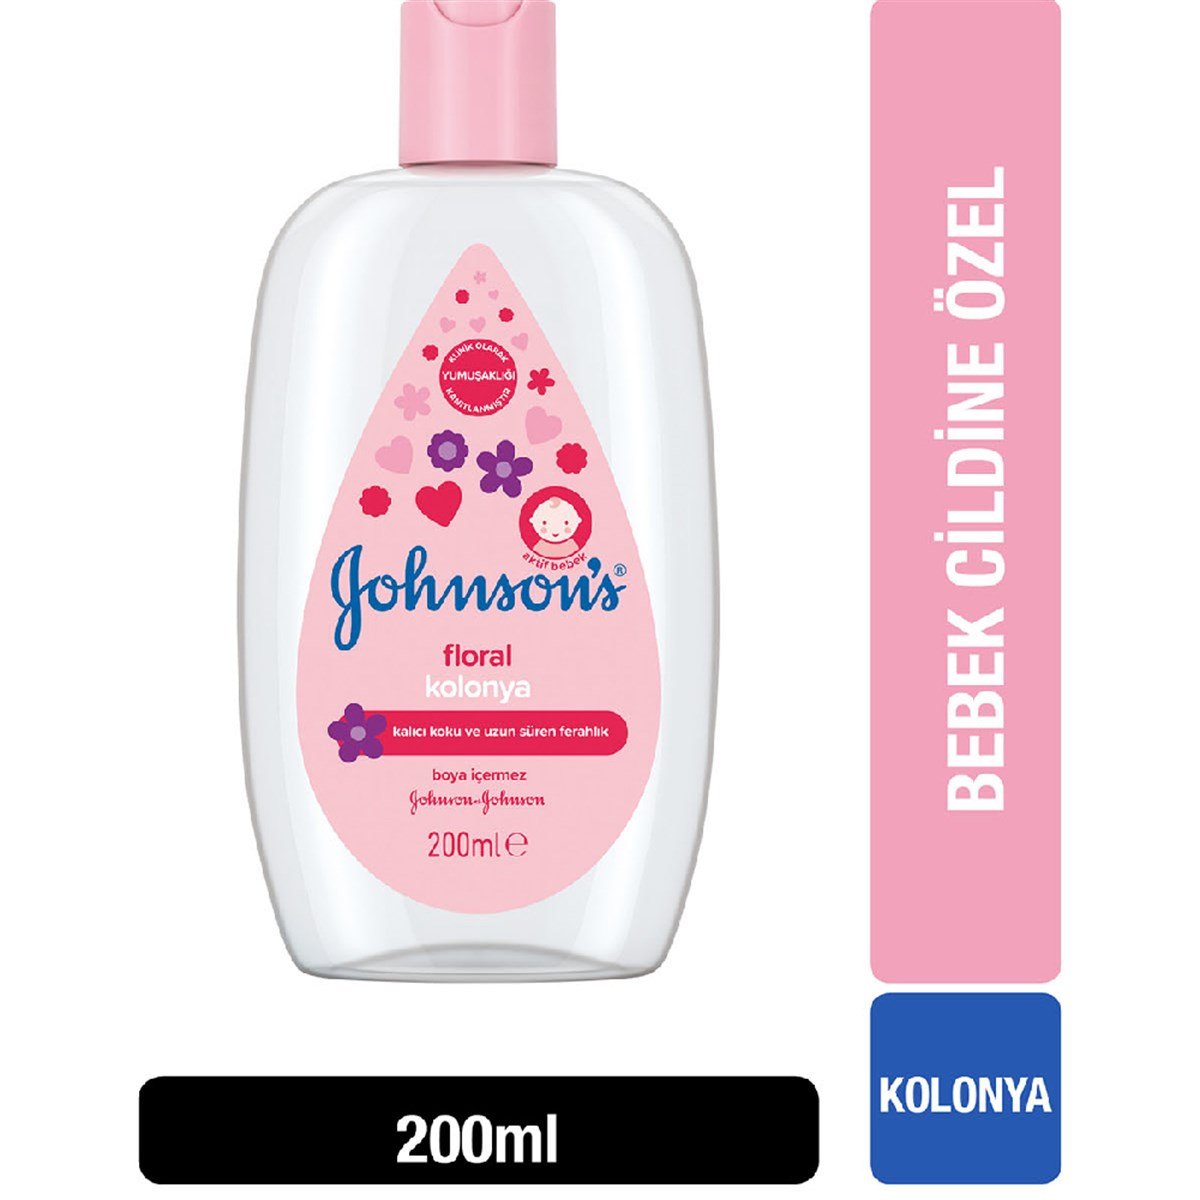 Johnson's Baby Kolonya Floral 200 ml. - Platin